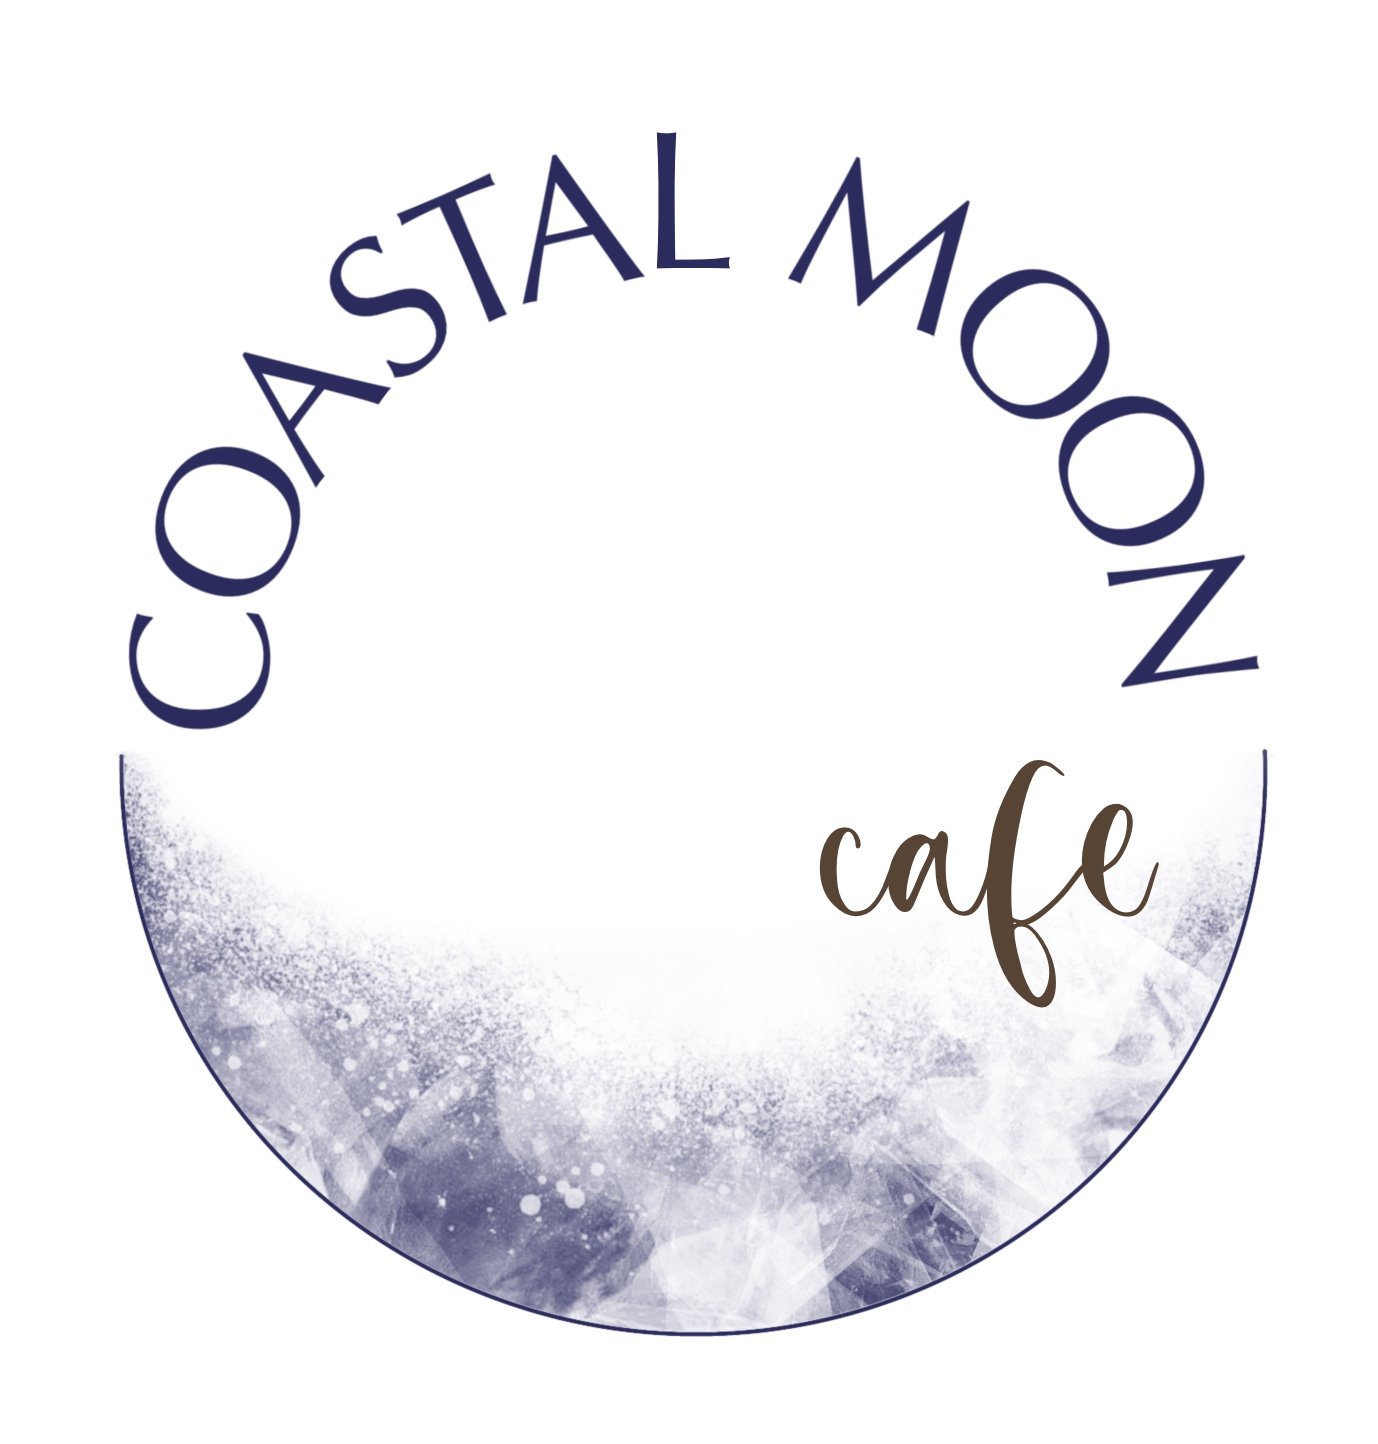 Coastal Moon Cafe